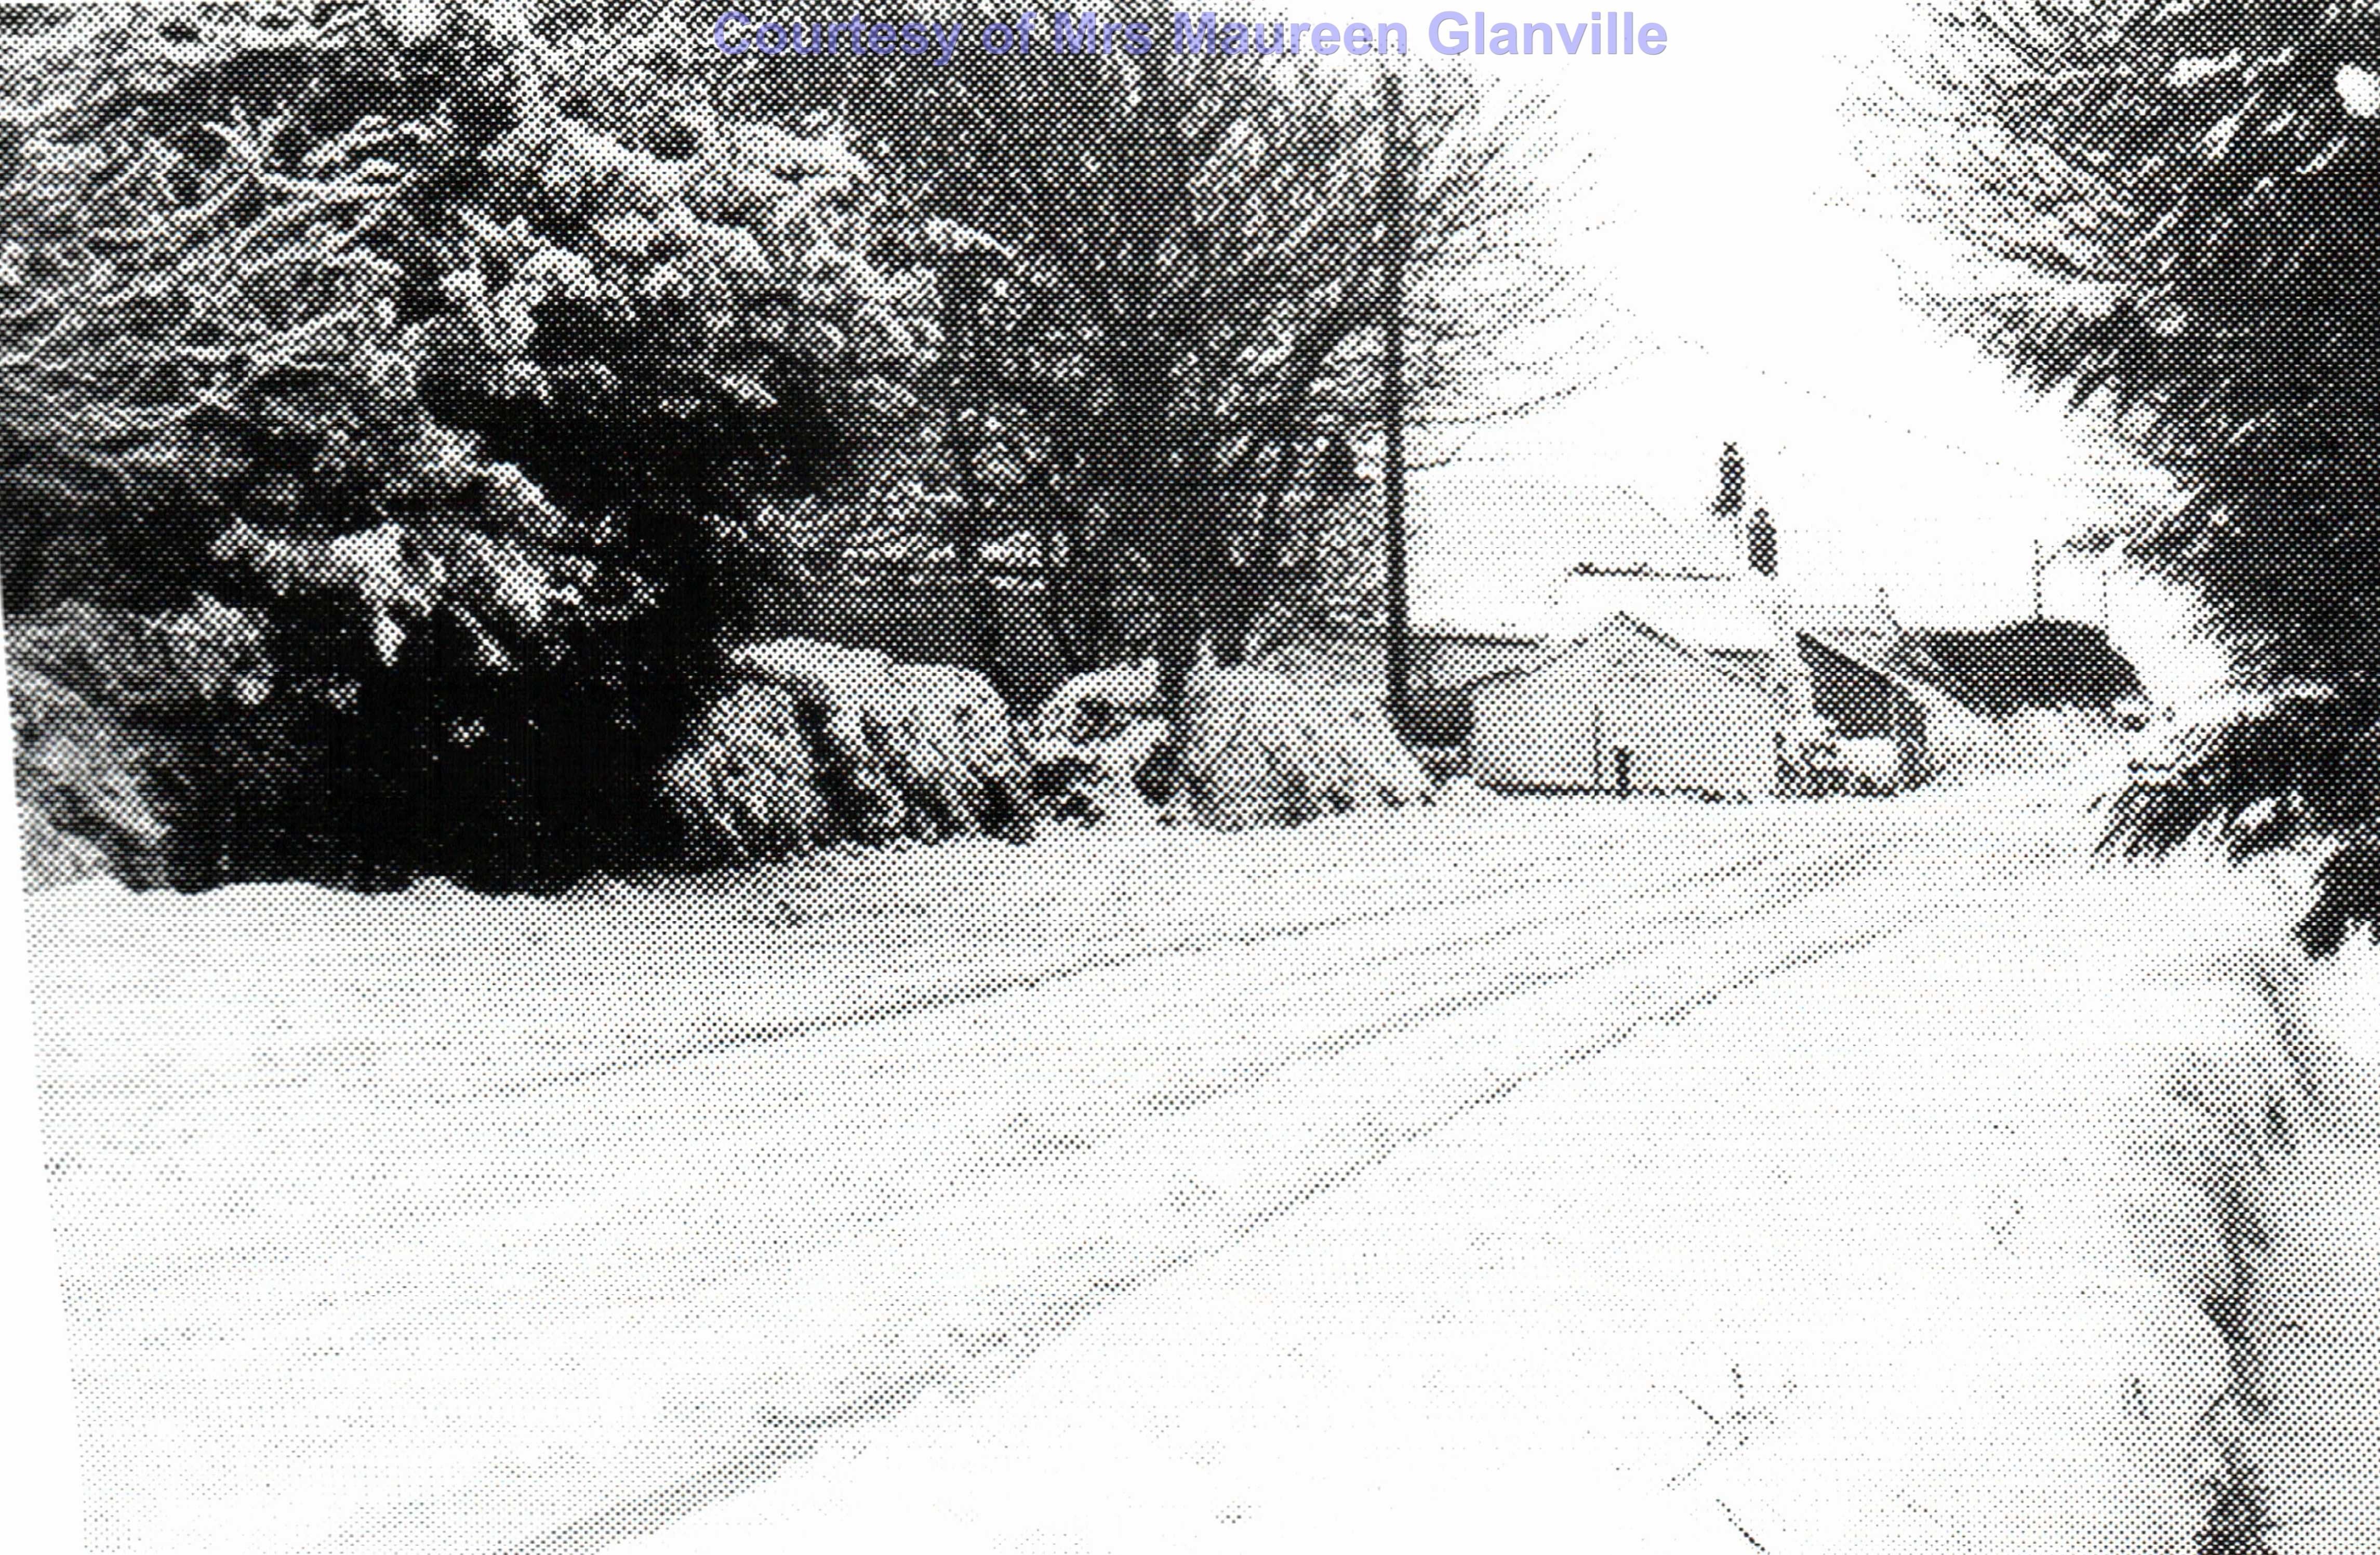 Rose Village in Snow - Jan 1986